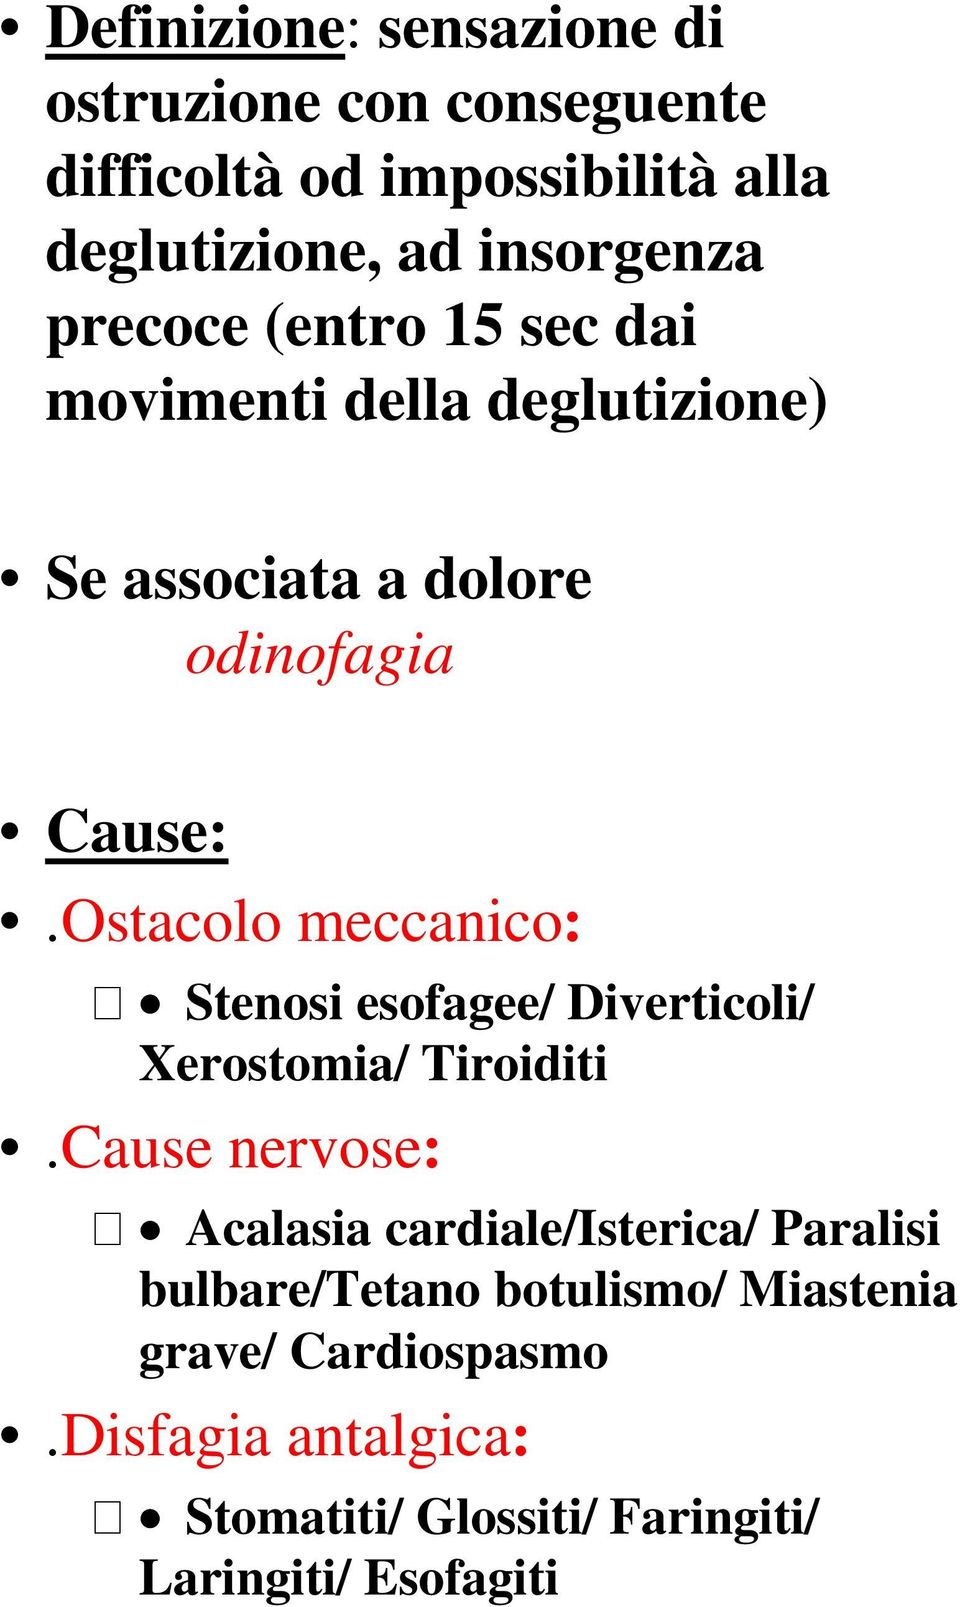 Ostacolo meccanico: Stenosi esofagee/ Diverticoli/ Xerostomia/ Tiroiditi.